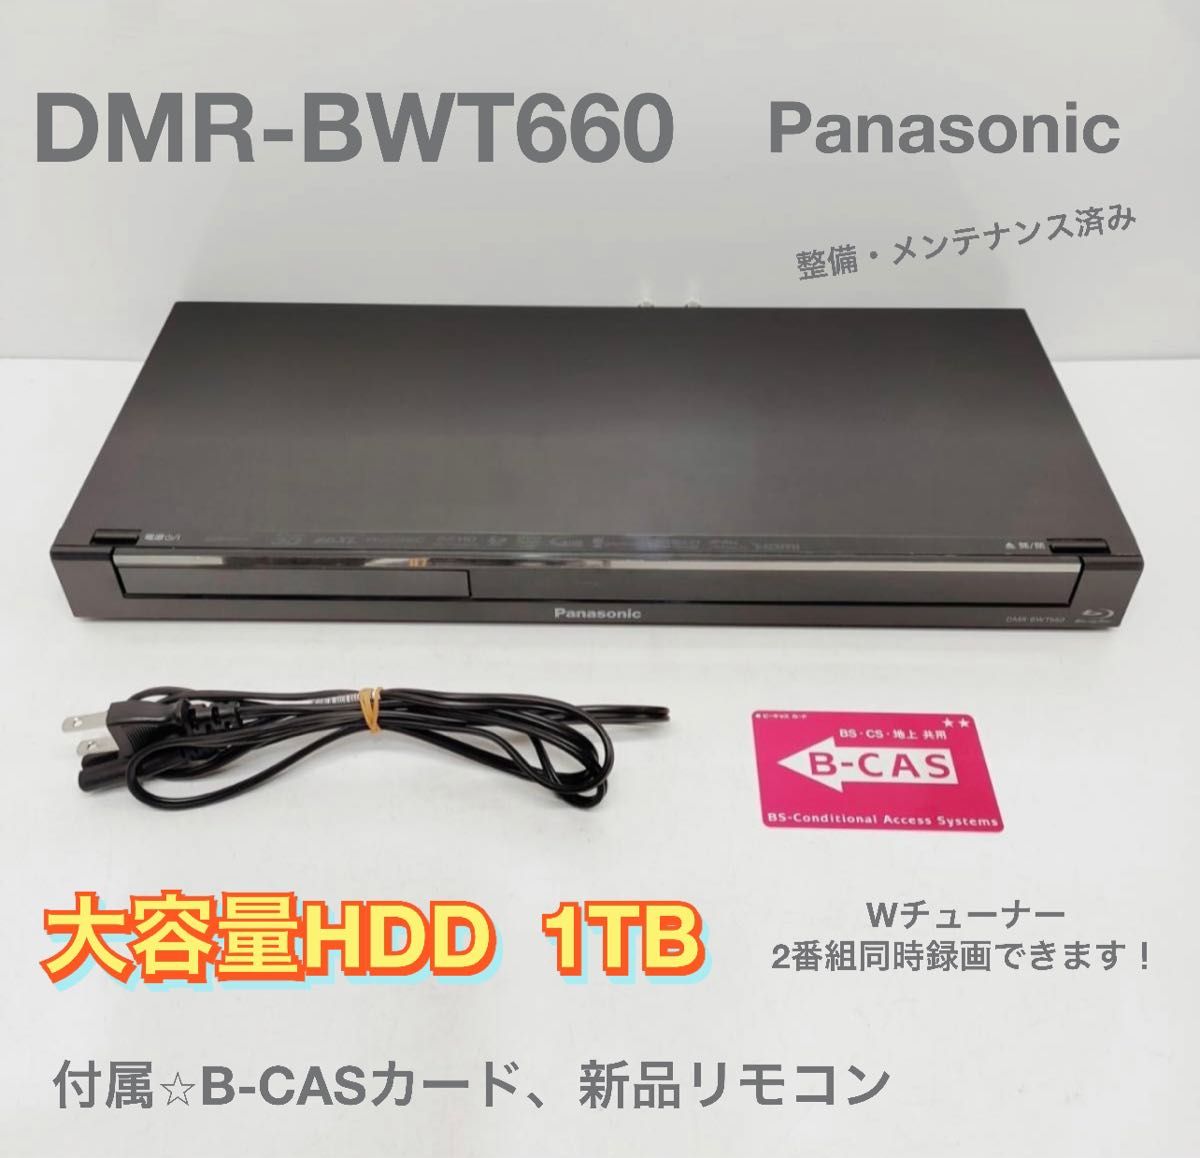 1TB搭載2番組録画 Panasonic Blu-ray DMR-BWT660 - ブルーレイレコーダー